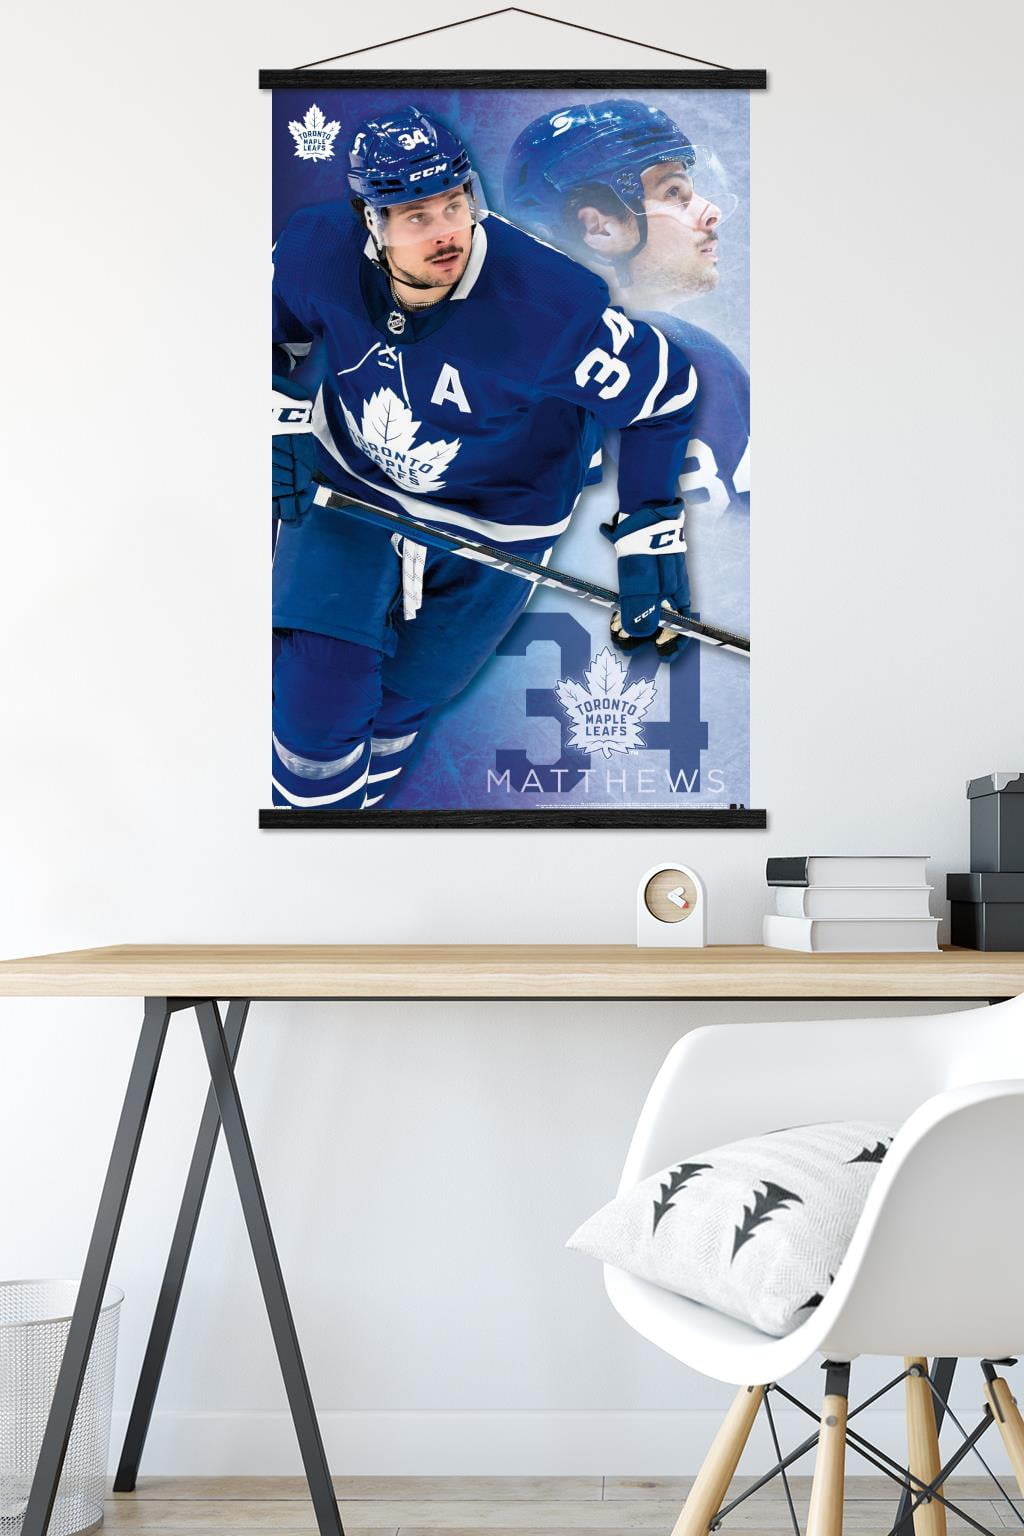 NHL Toronto Maple Leafs - Auston Matthews 21 Wall Poster : :  Sports & Outdoors